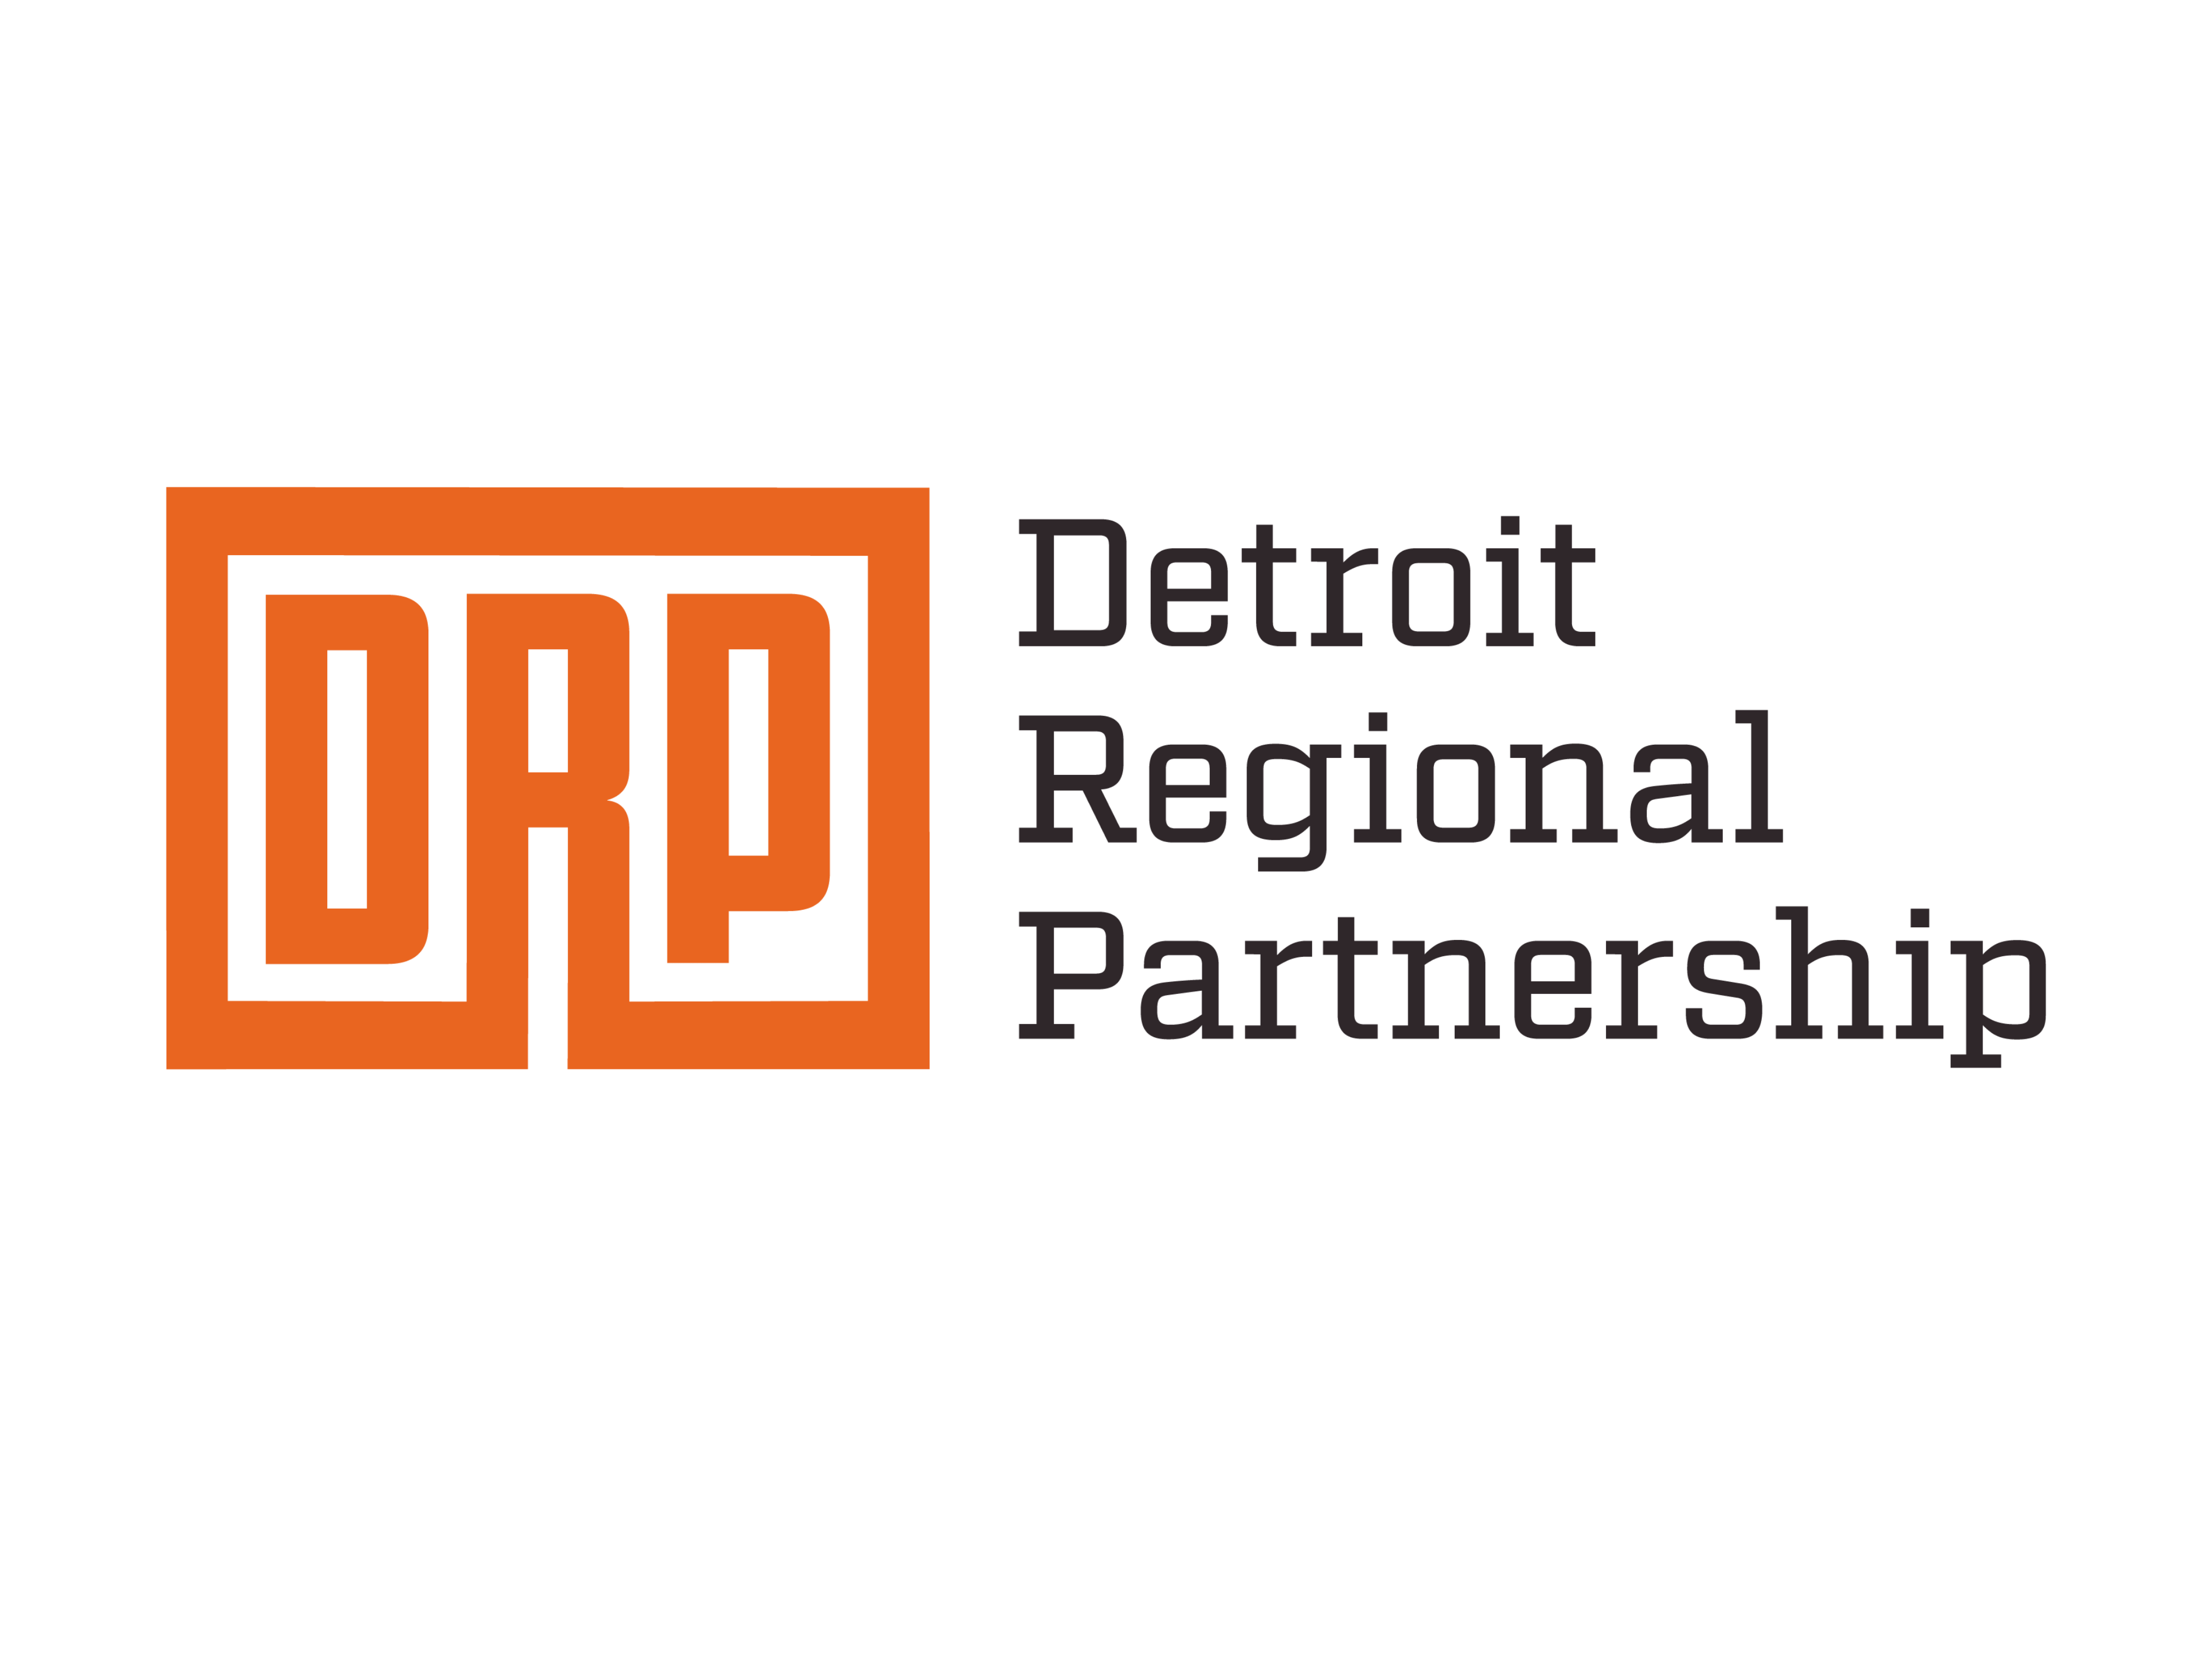 Detroilt Regional Partnership.png